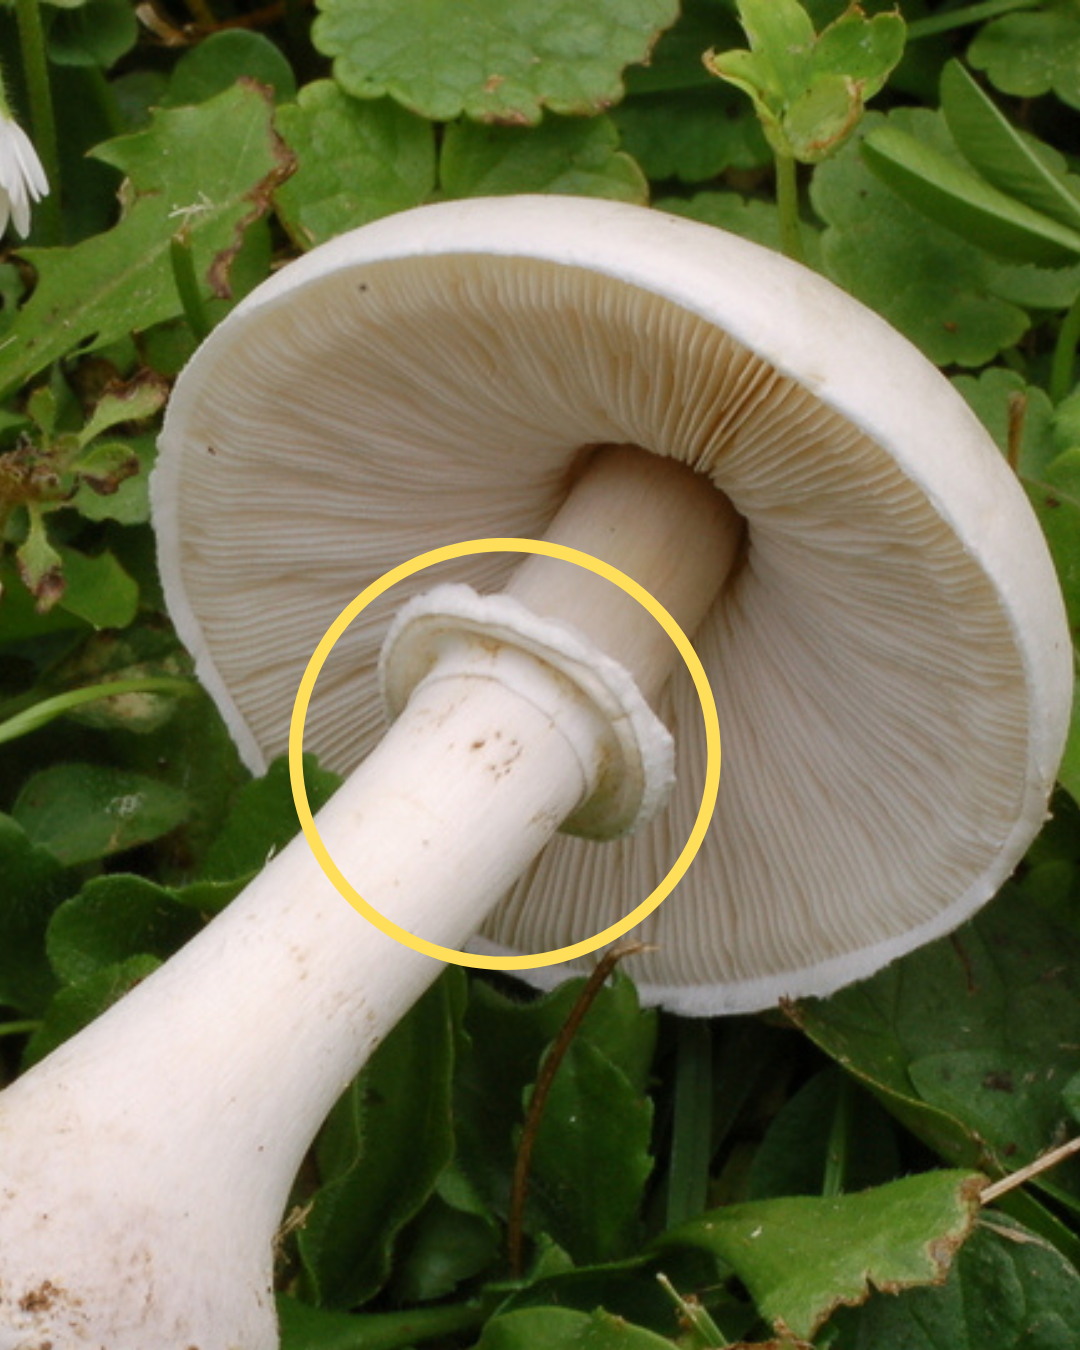 Poisonous mushroom has ring on the stem